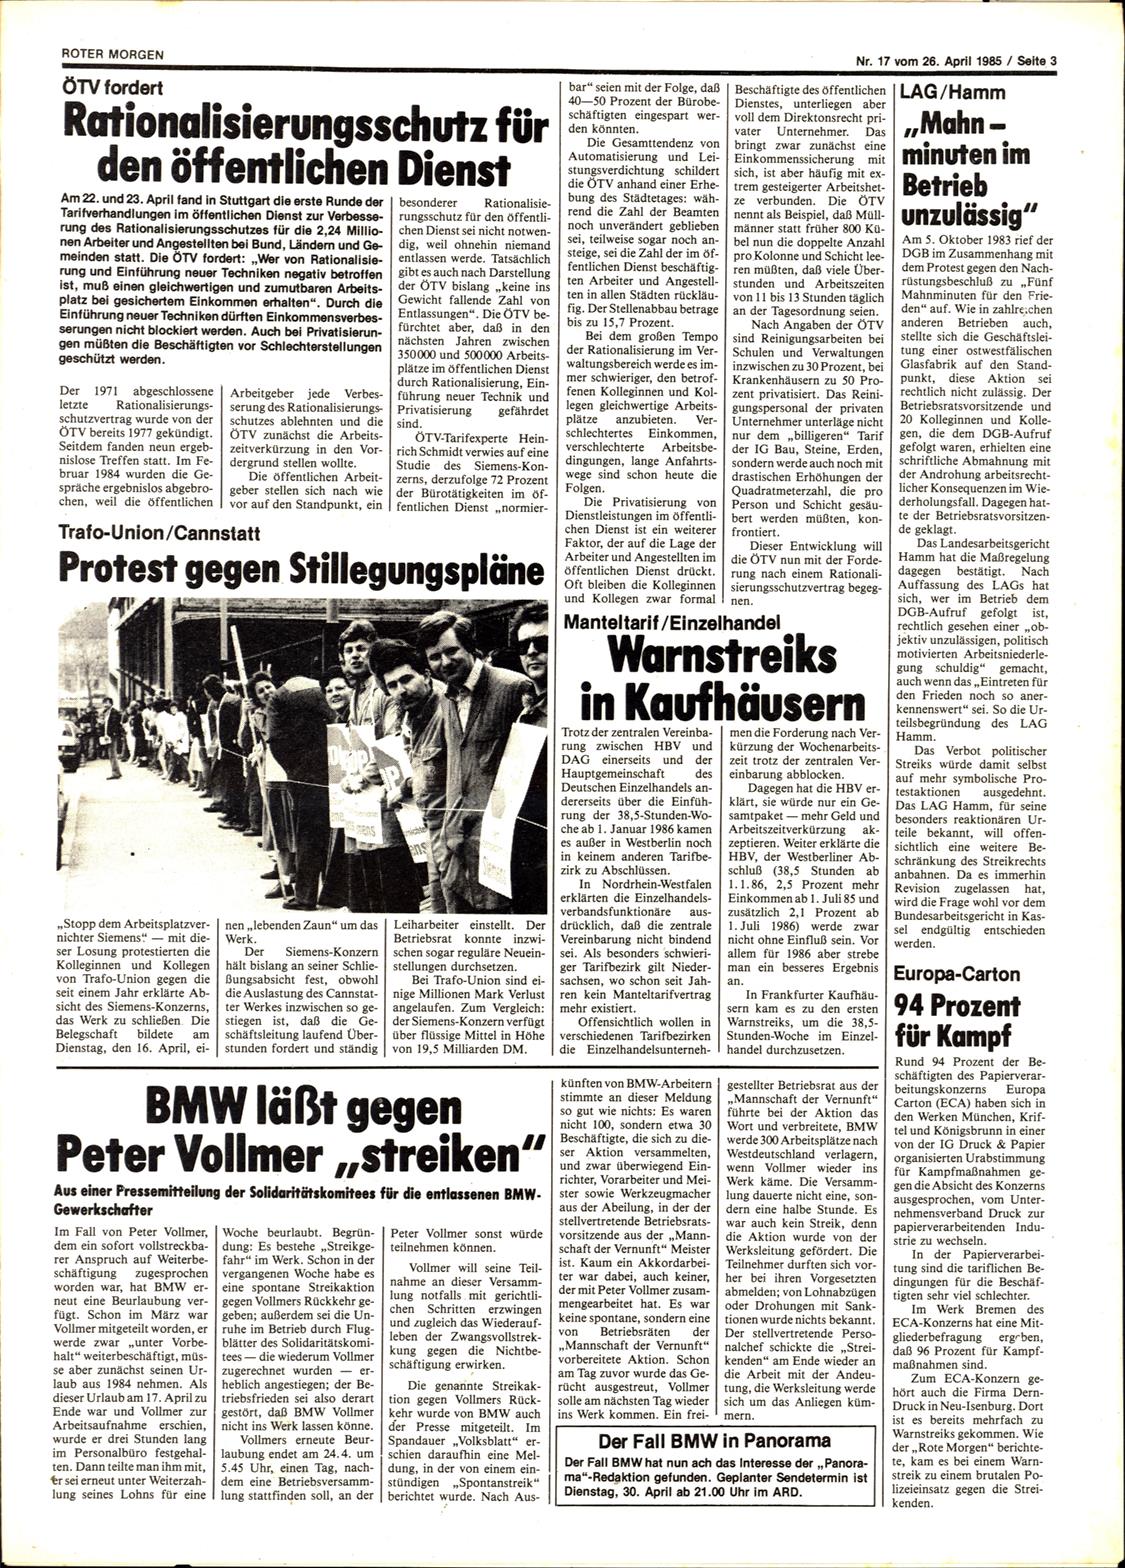 Roter Morgen, 19. Jg., 26. April 1985, Nr. 17, Seite 3